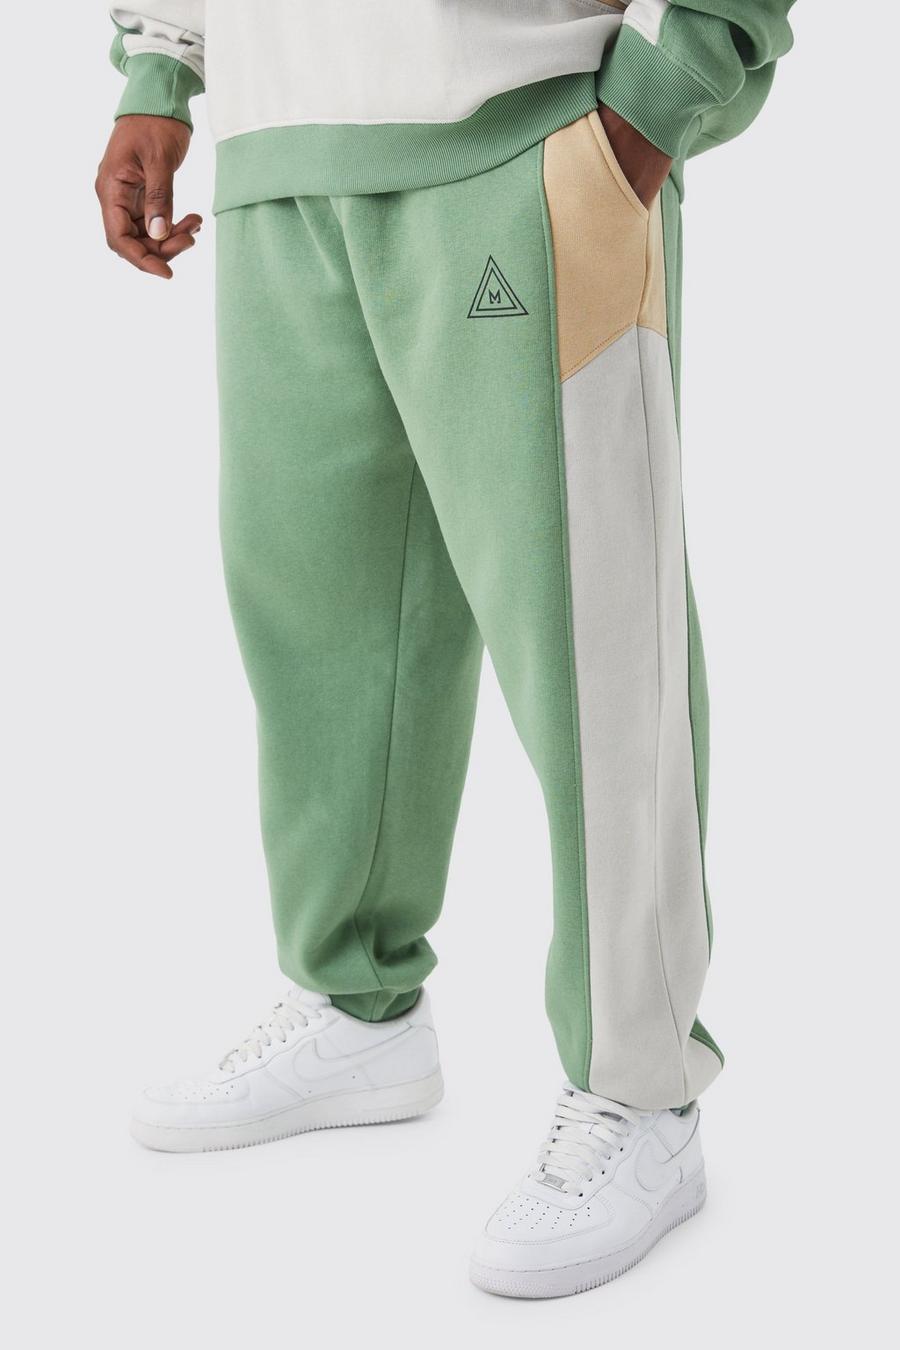 Pantalón deportivo Plus con colores en bloque, Sage green